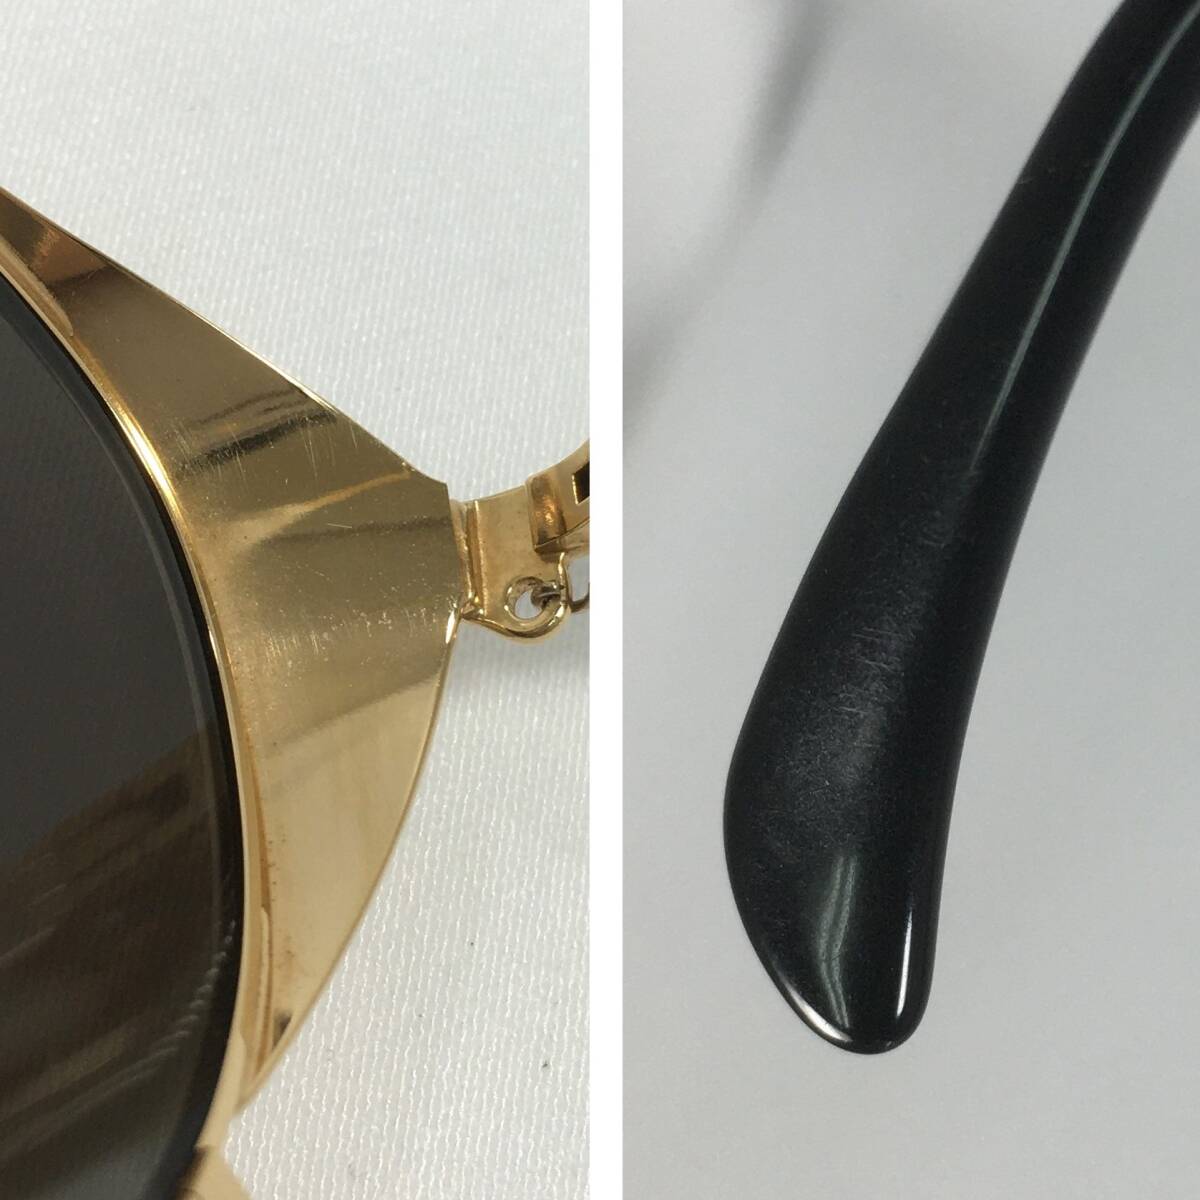  Jean-Paul Gaultier sunglasses 56-4174 Gold green case attaching made in Japan Vintage Jean Paul Gaultier